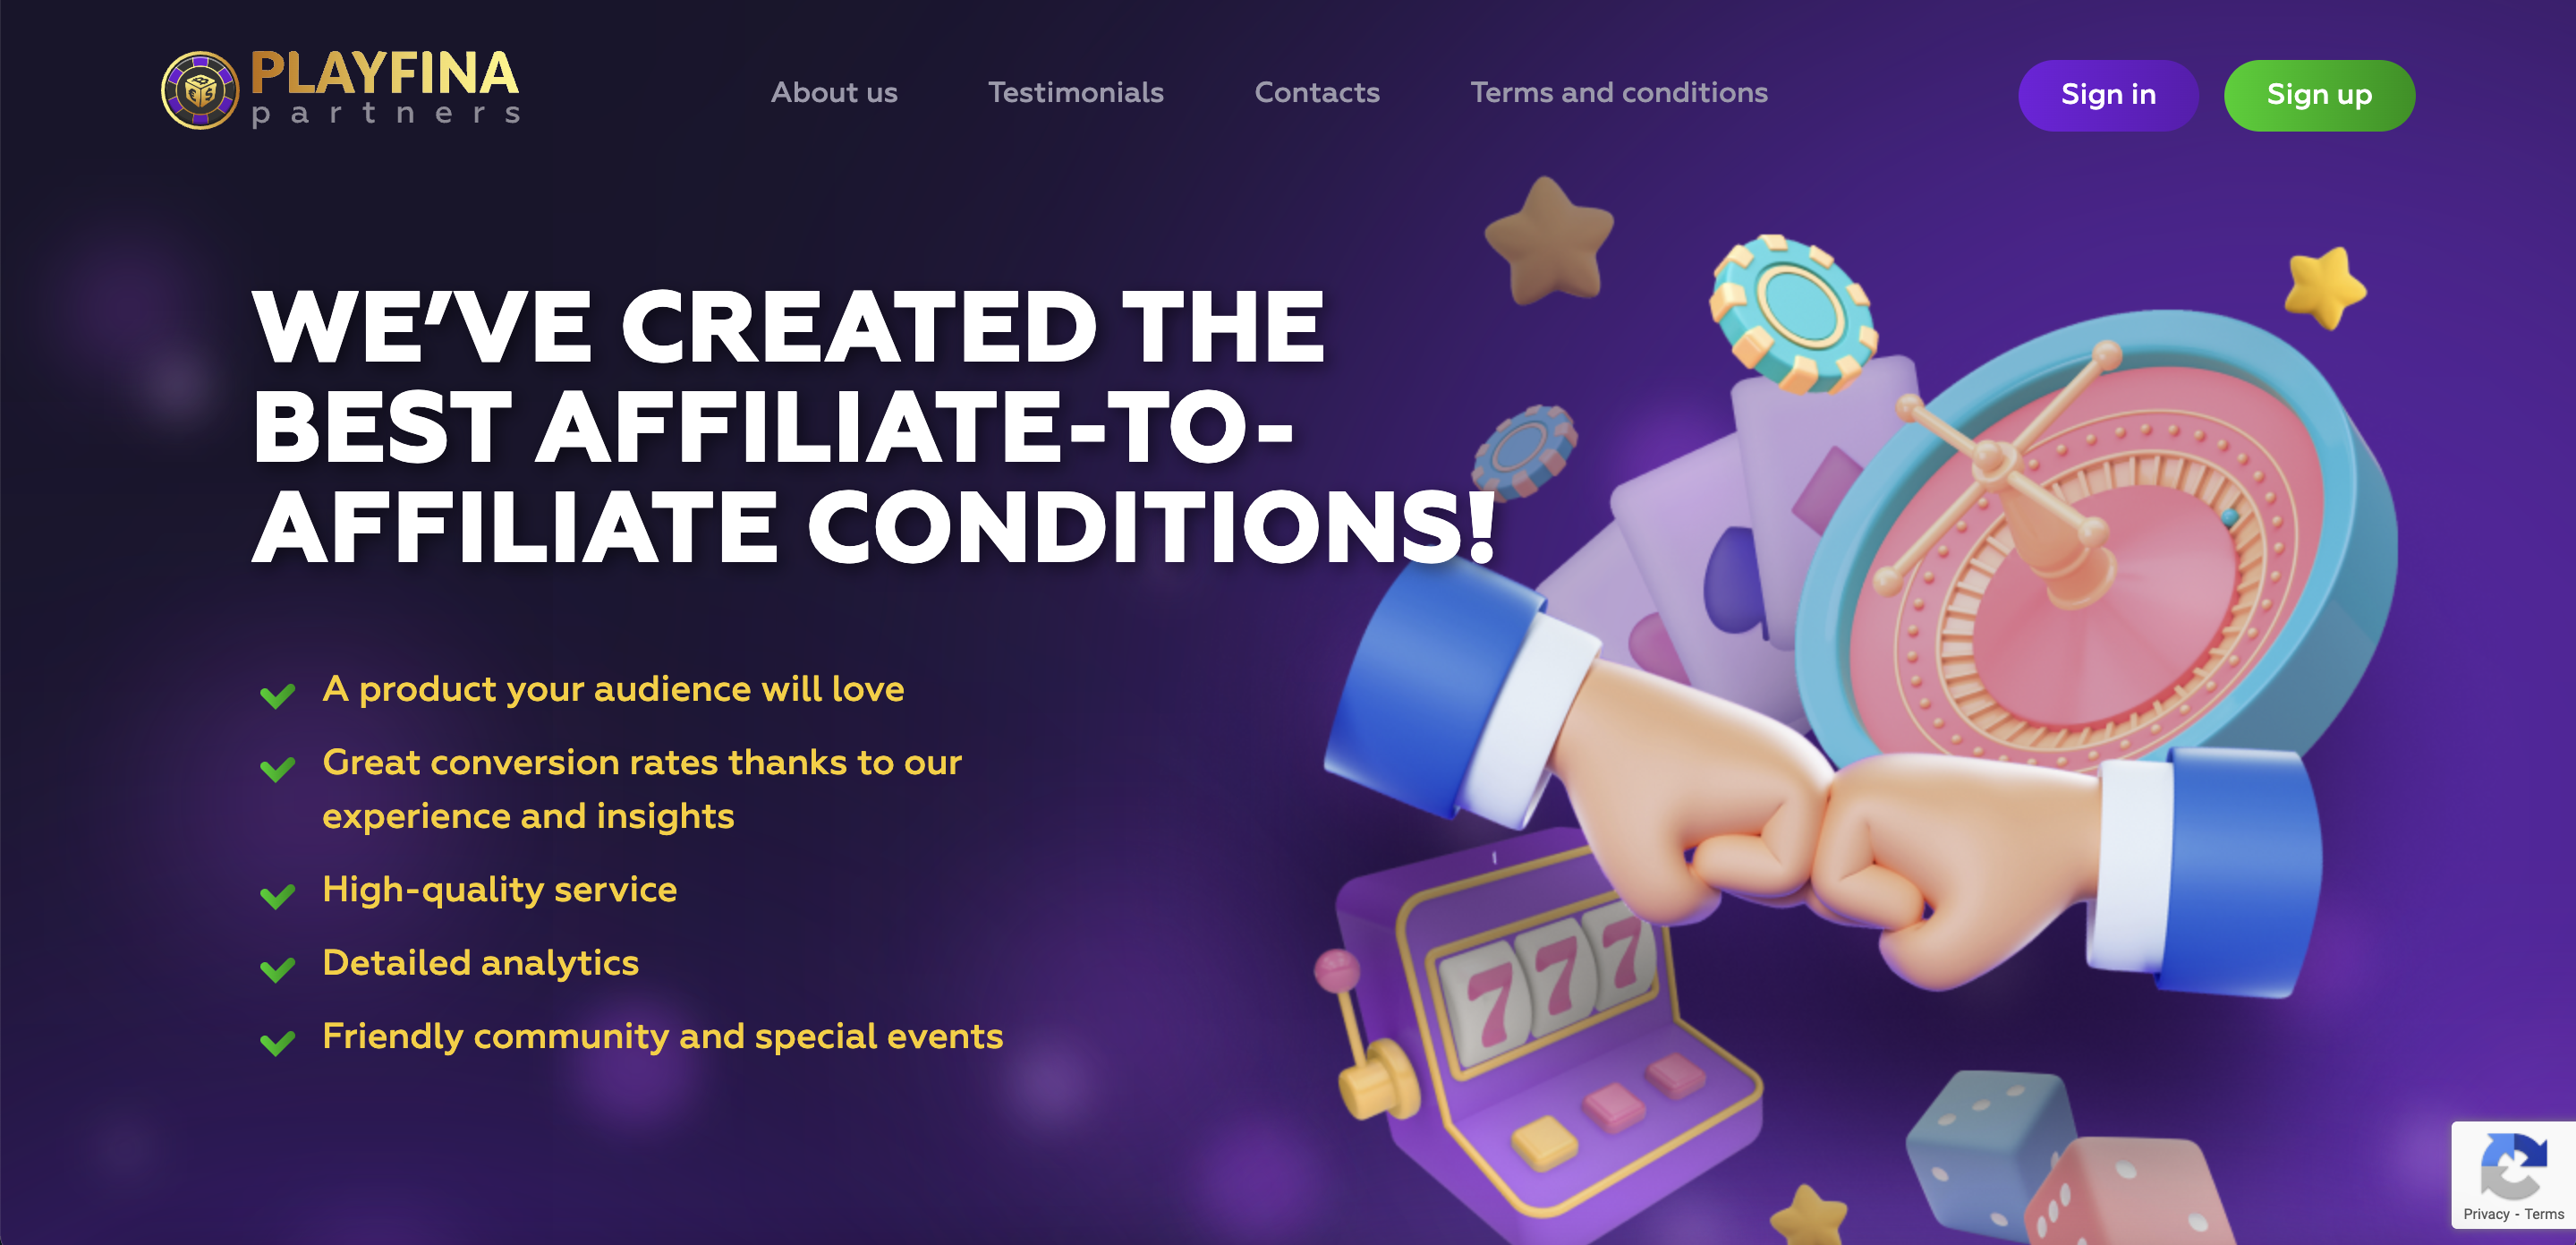 playfina partners website